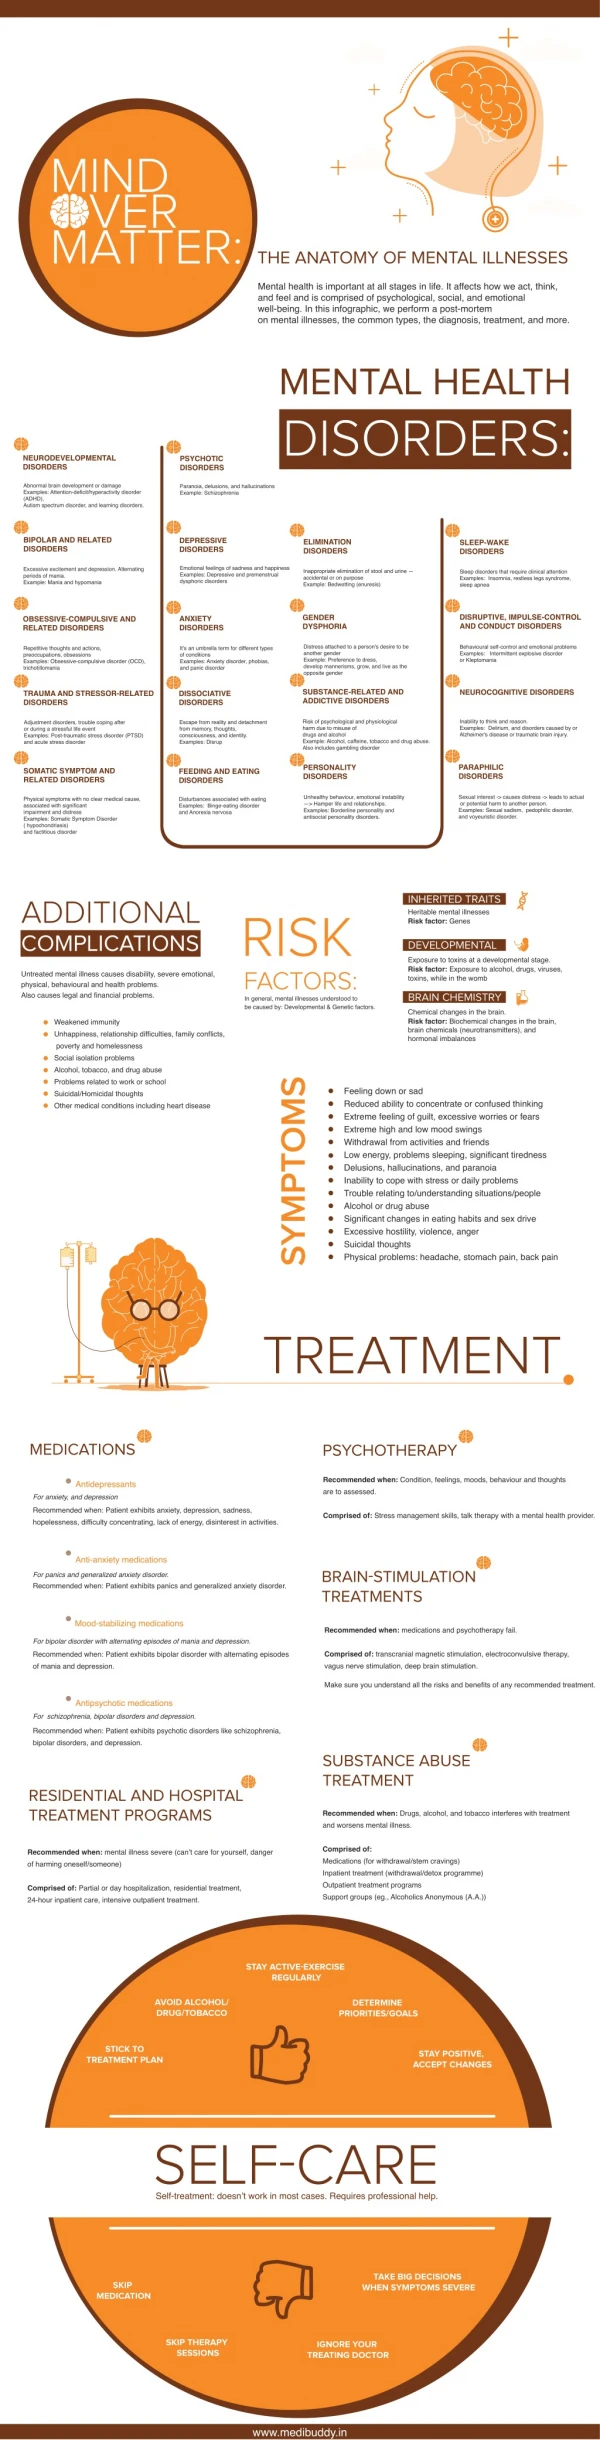 Mental Illness Types, Risk Factors, and Treatment